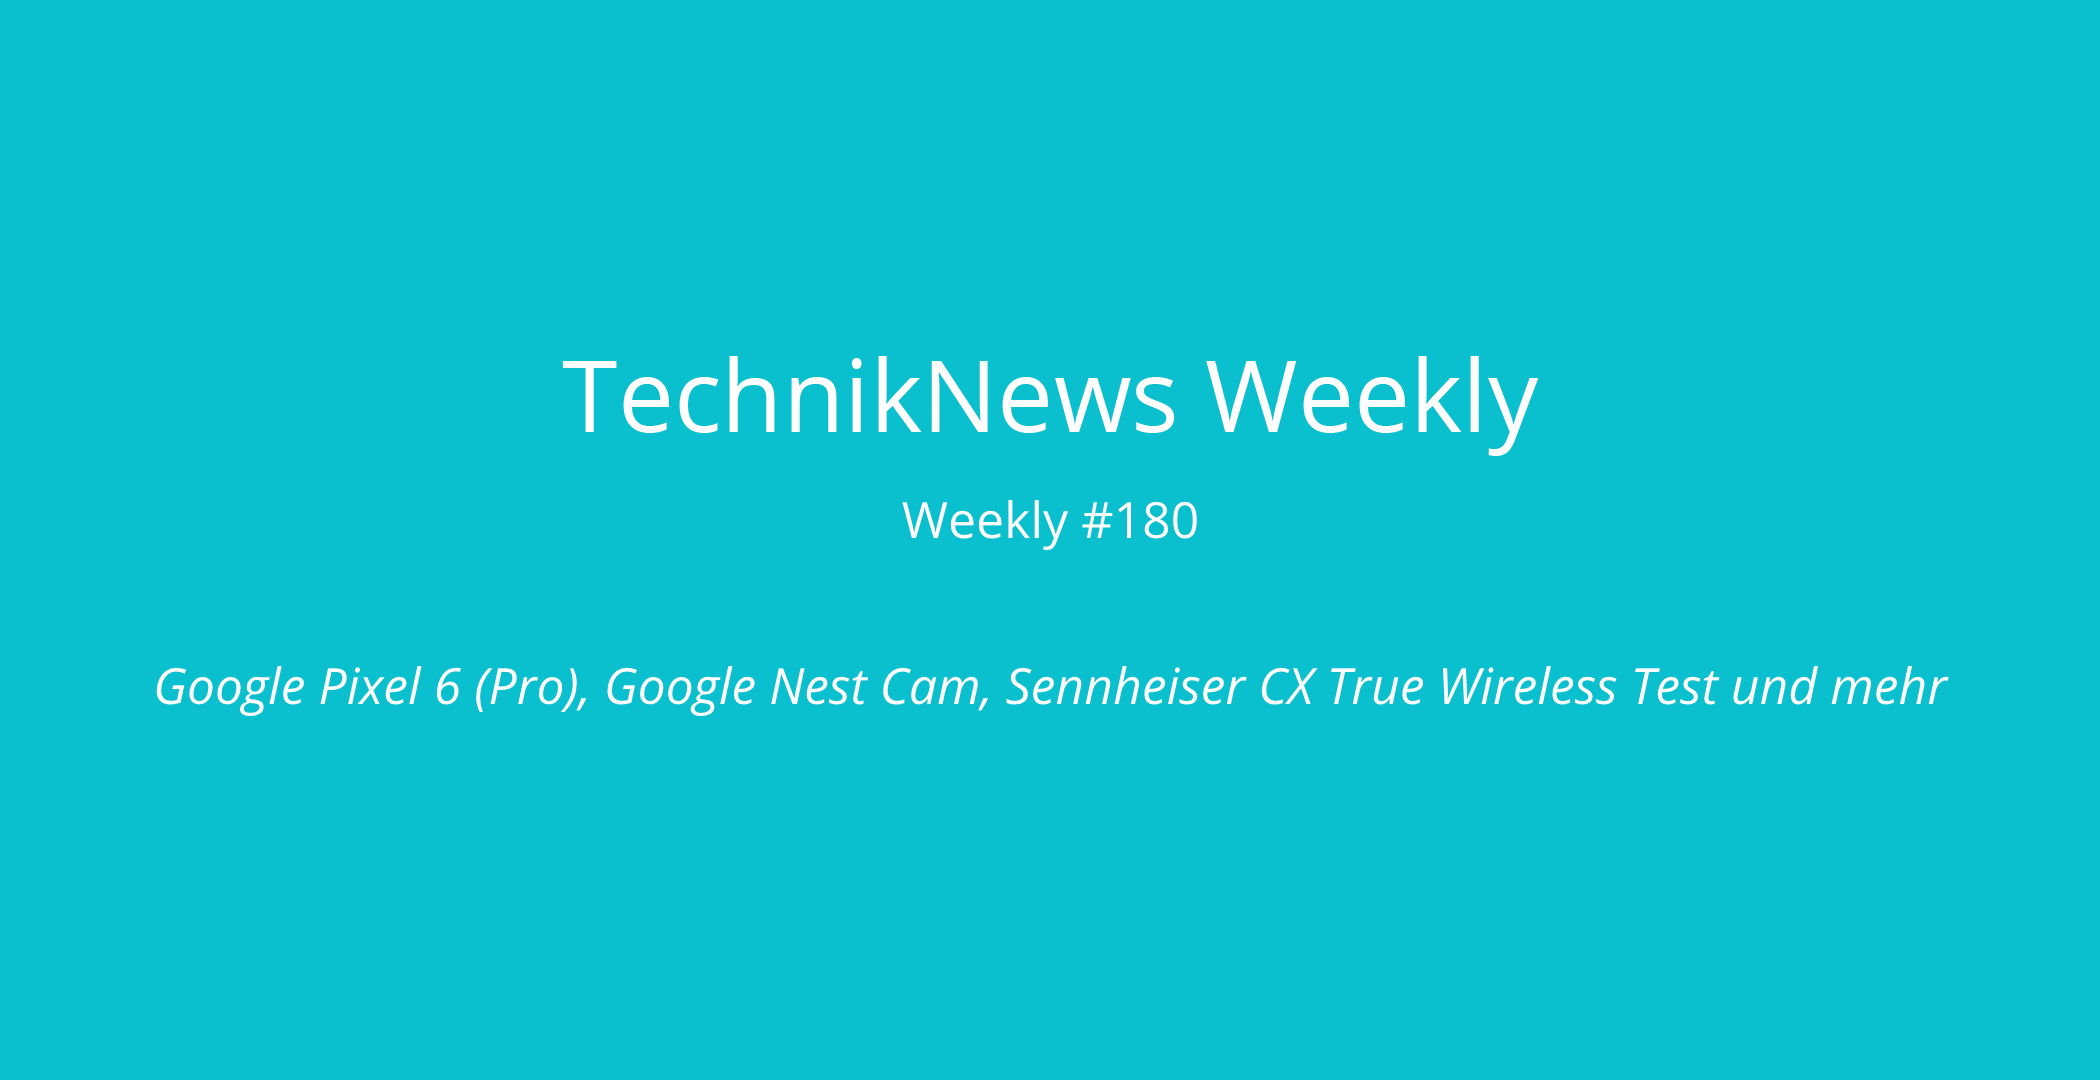 TechnikNews Weekly # 180